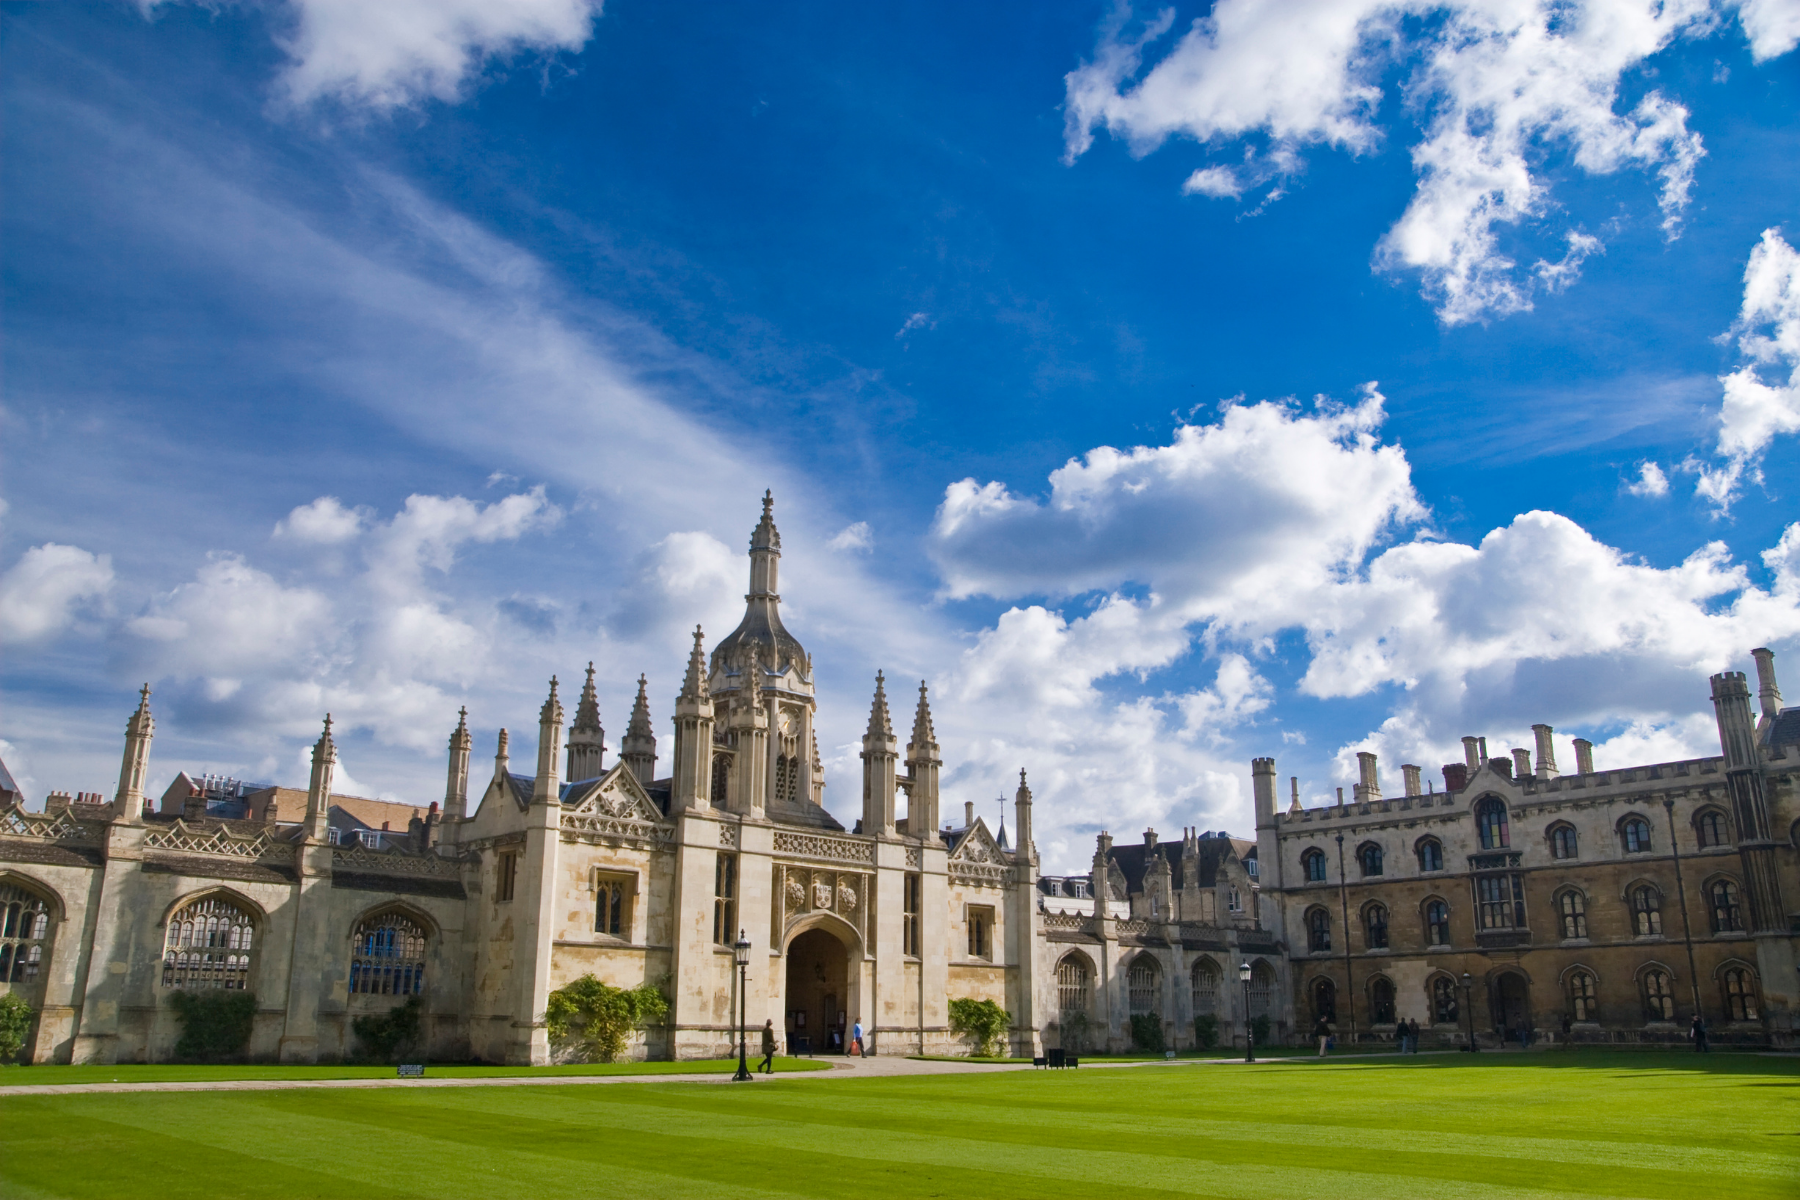 Oxford College in Cambridge, UK.